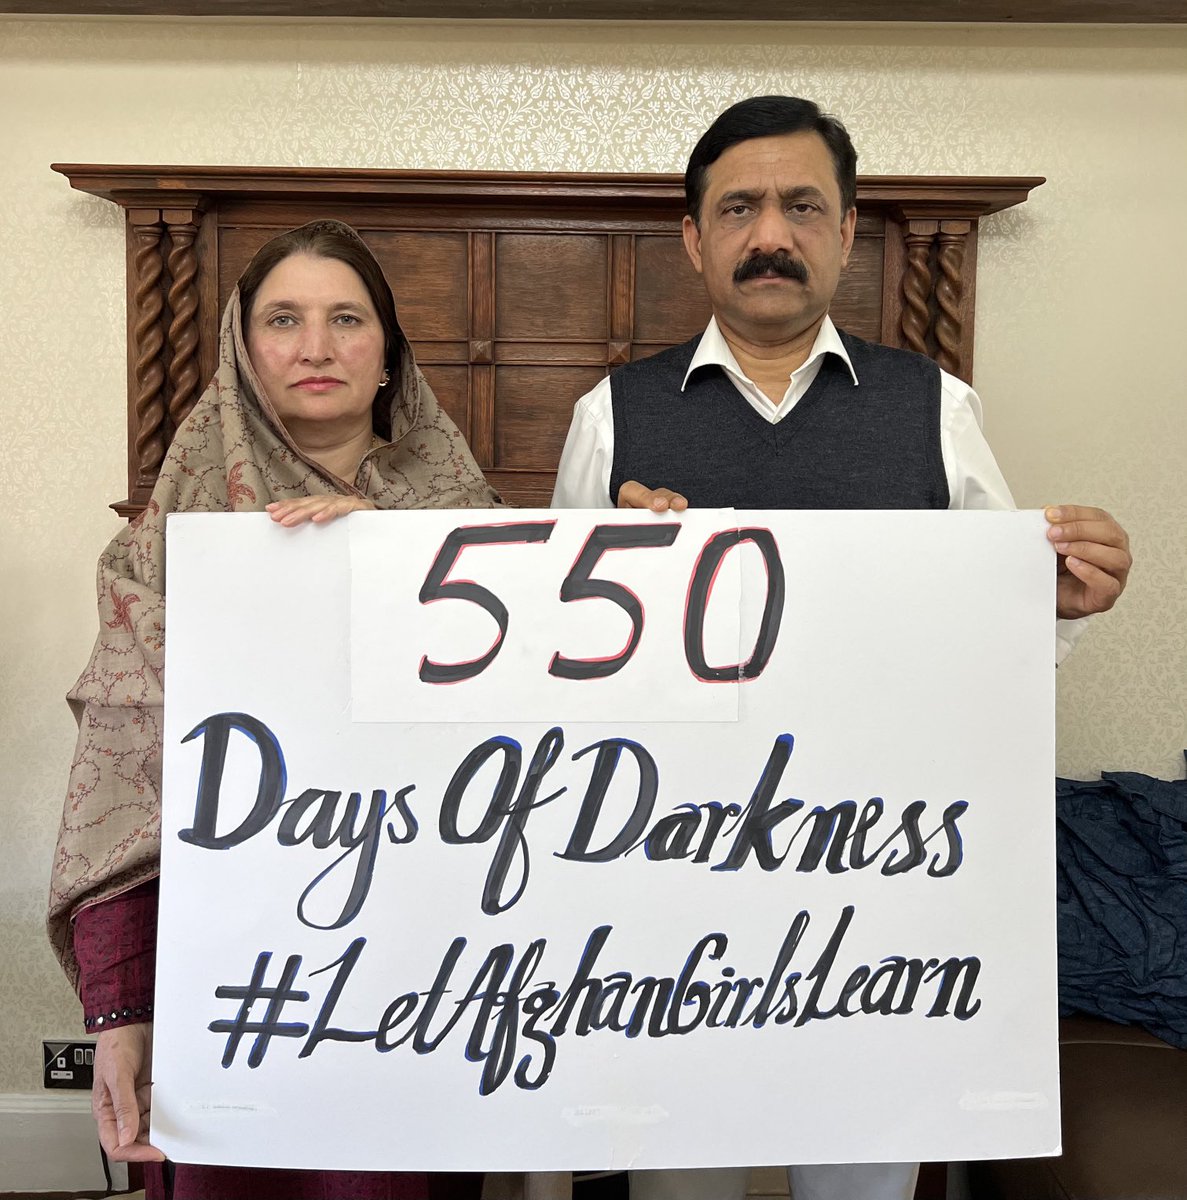 550 day's of darkness
#550daysofdarkness 
#letAfghanGirlsLearn